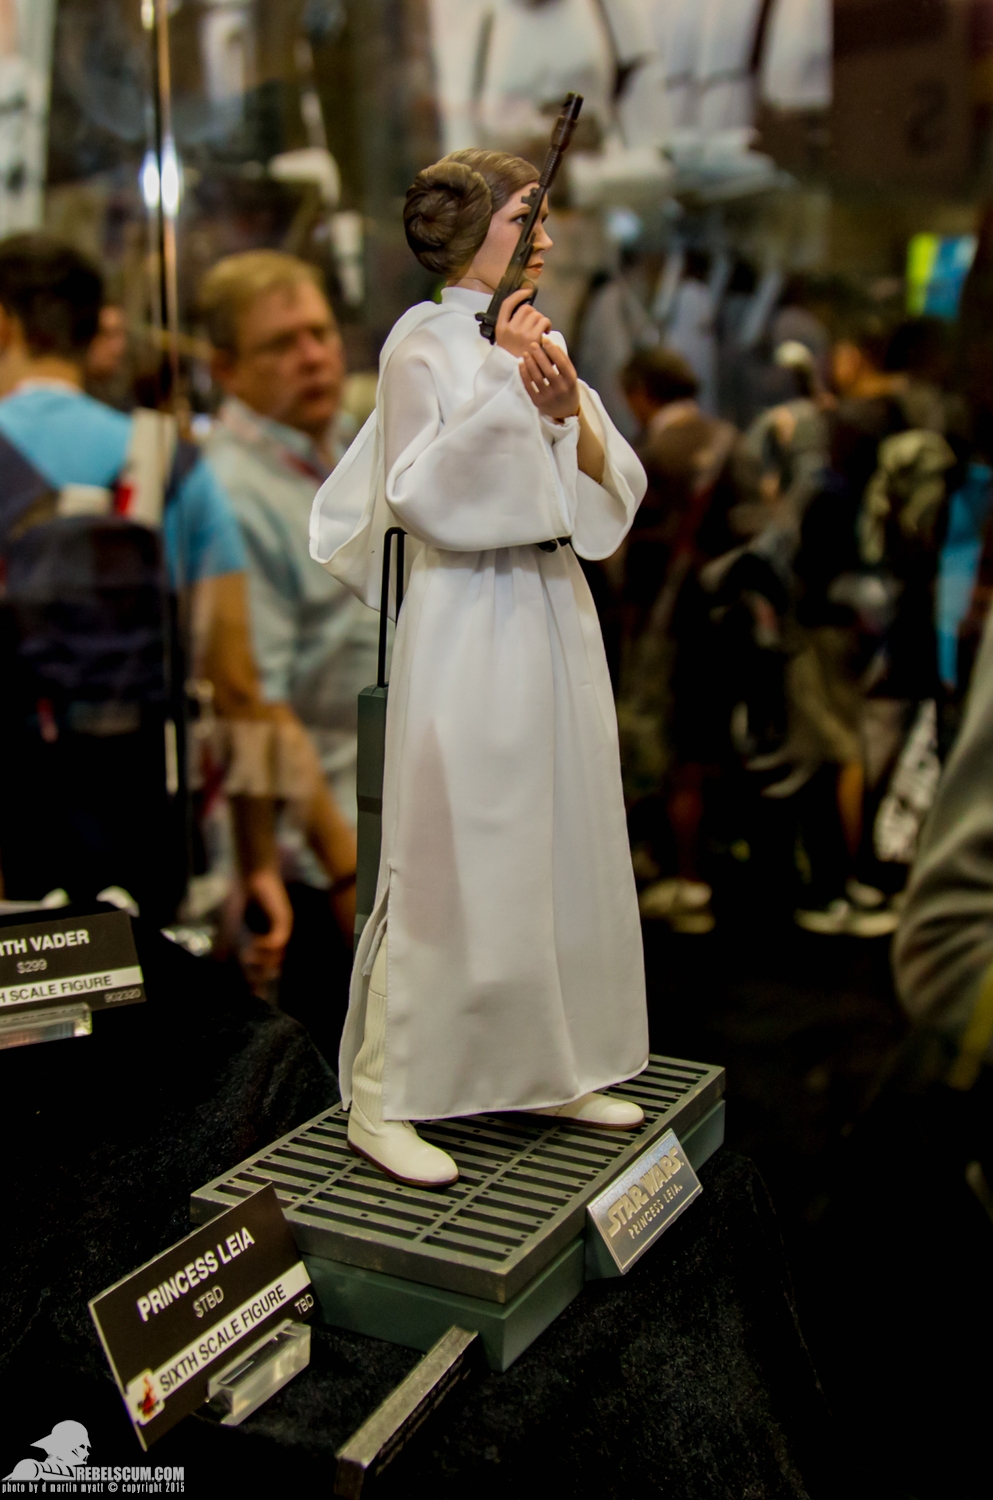 Hot-Toys-Display-2015-San-Diego-Comic-Con-SDCC-026.jpg